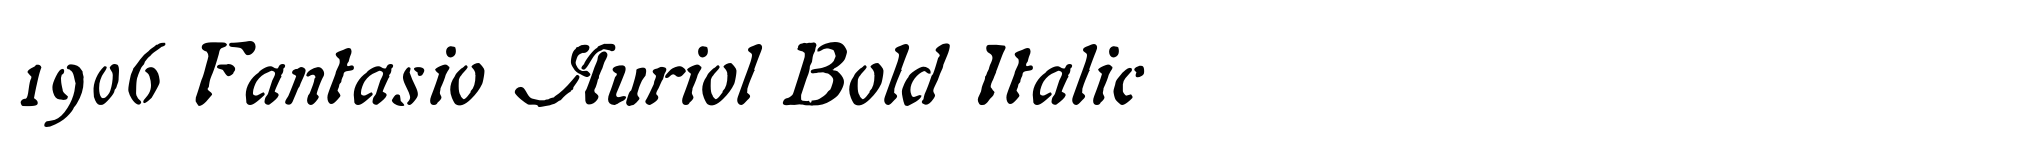 1906 Fantasio Auriol Bold Italic image